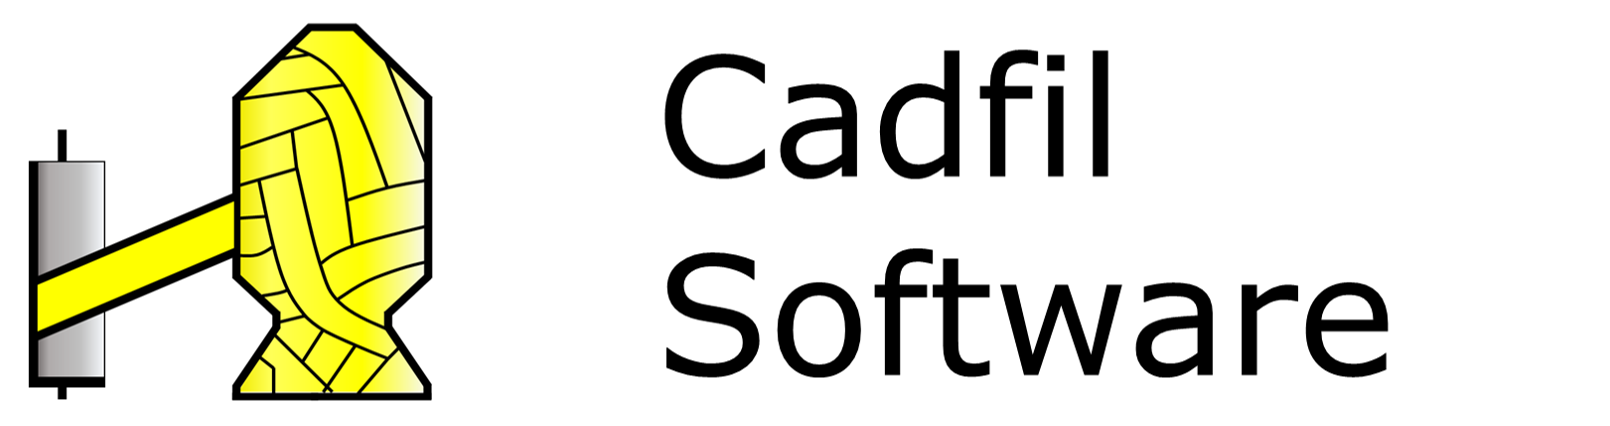 Cadfil software